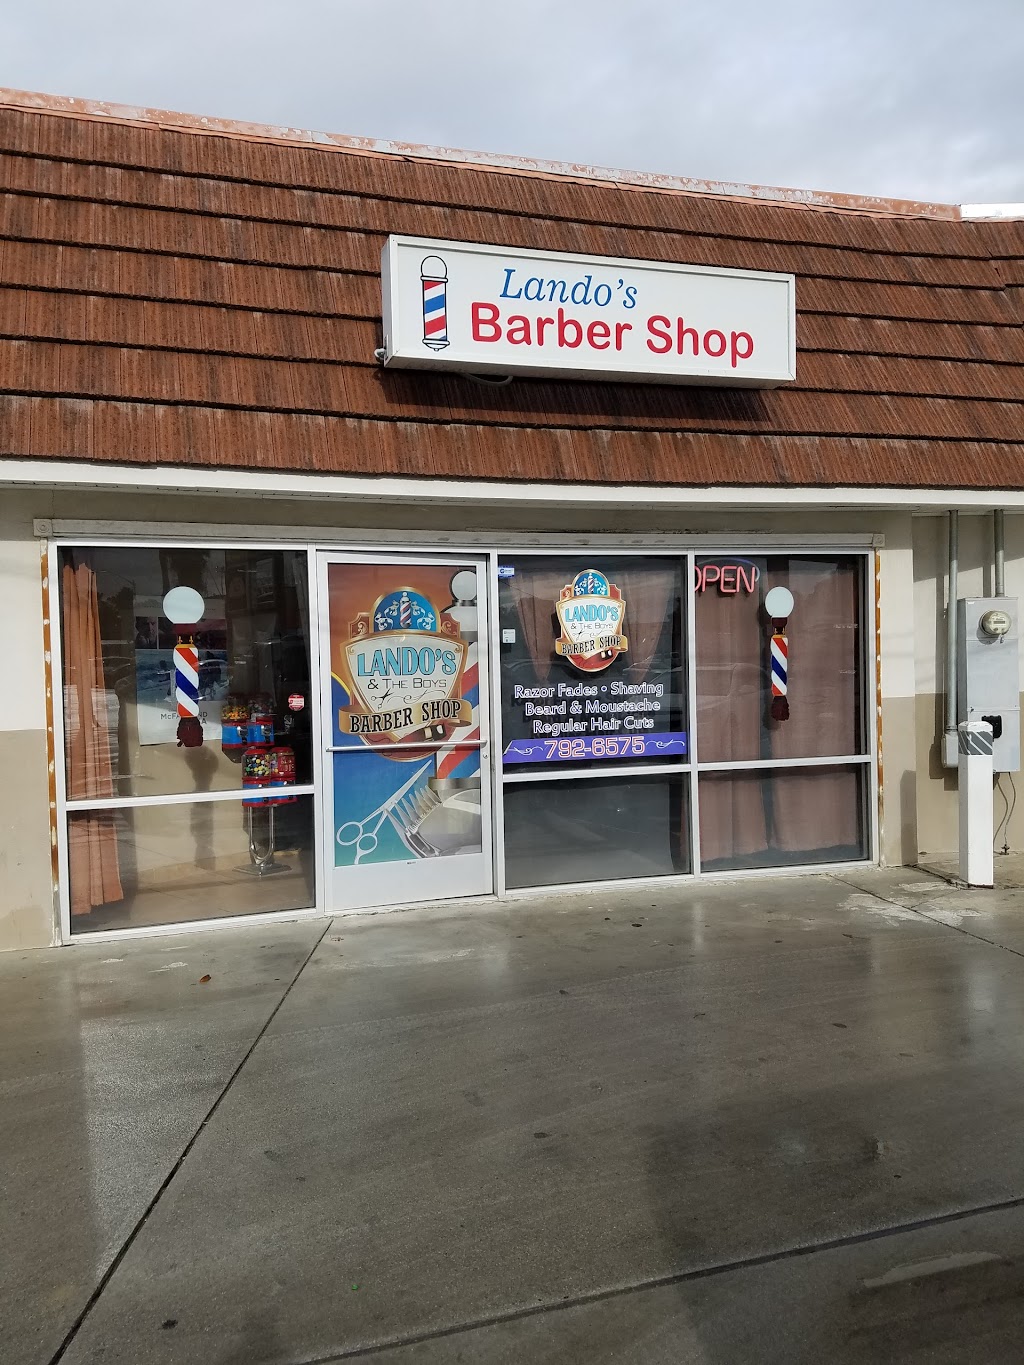 Lando & the Boys Barber Shop | 104 W Sherwood Ave, McFarland, CA 93250, USA | Phone: (661) 792-6575